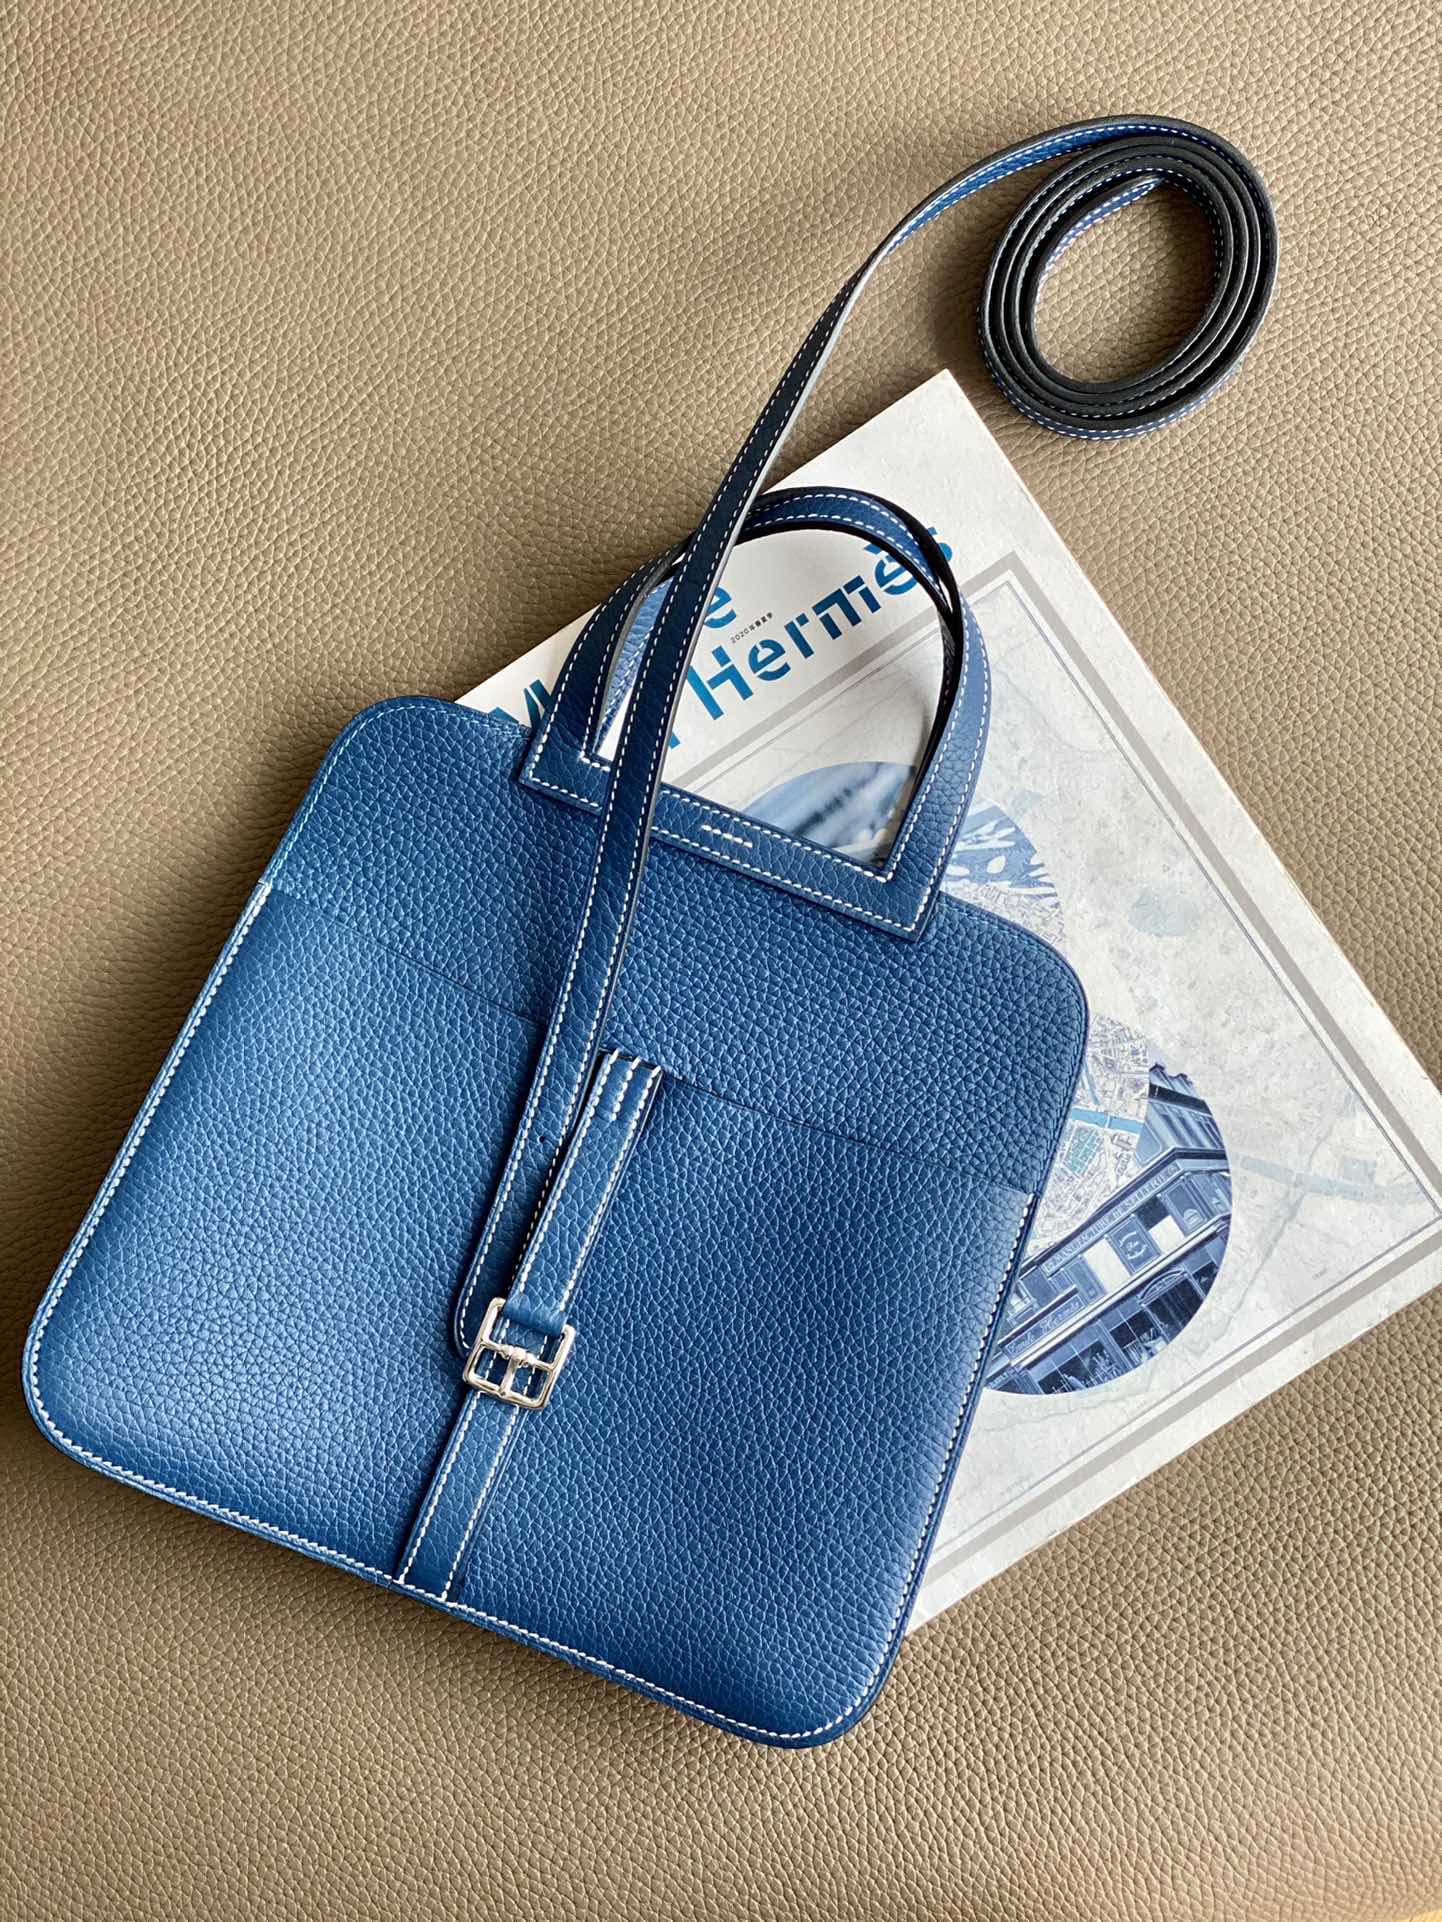 Hermes Bags Handbags Knockoff Highest Quality
 MT250250